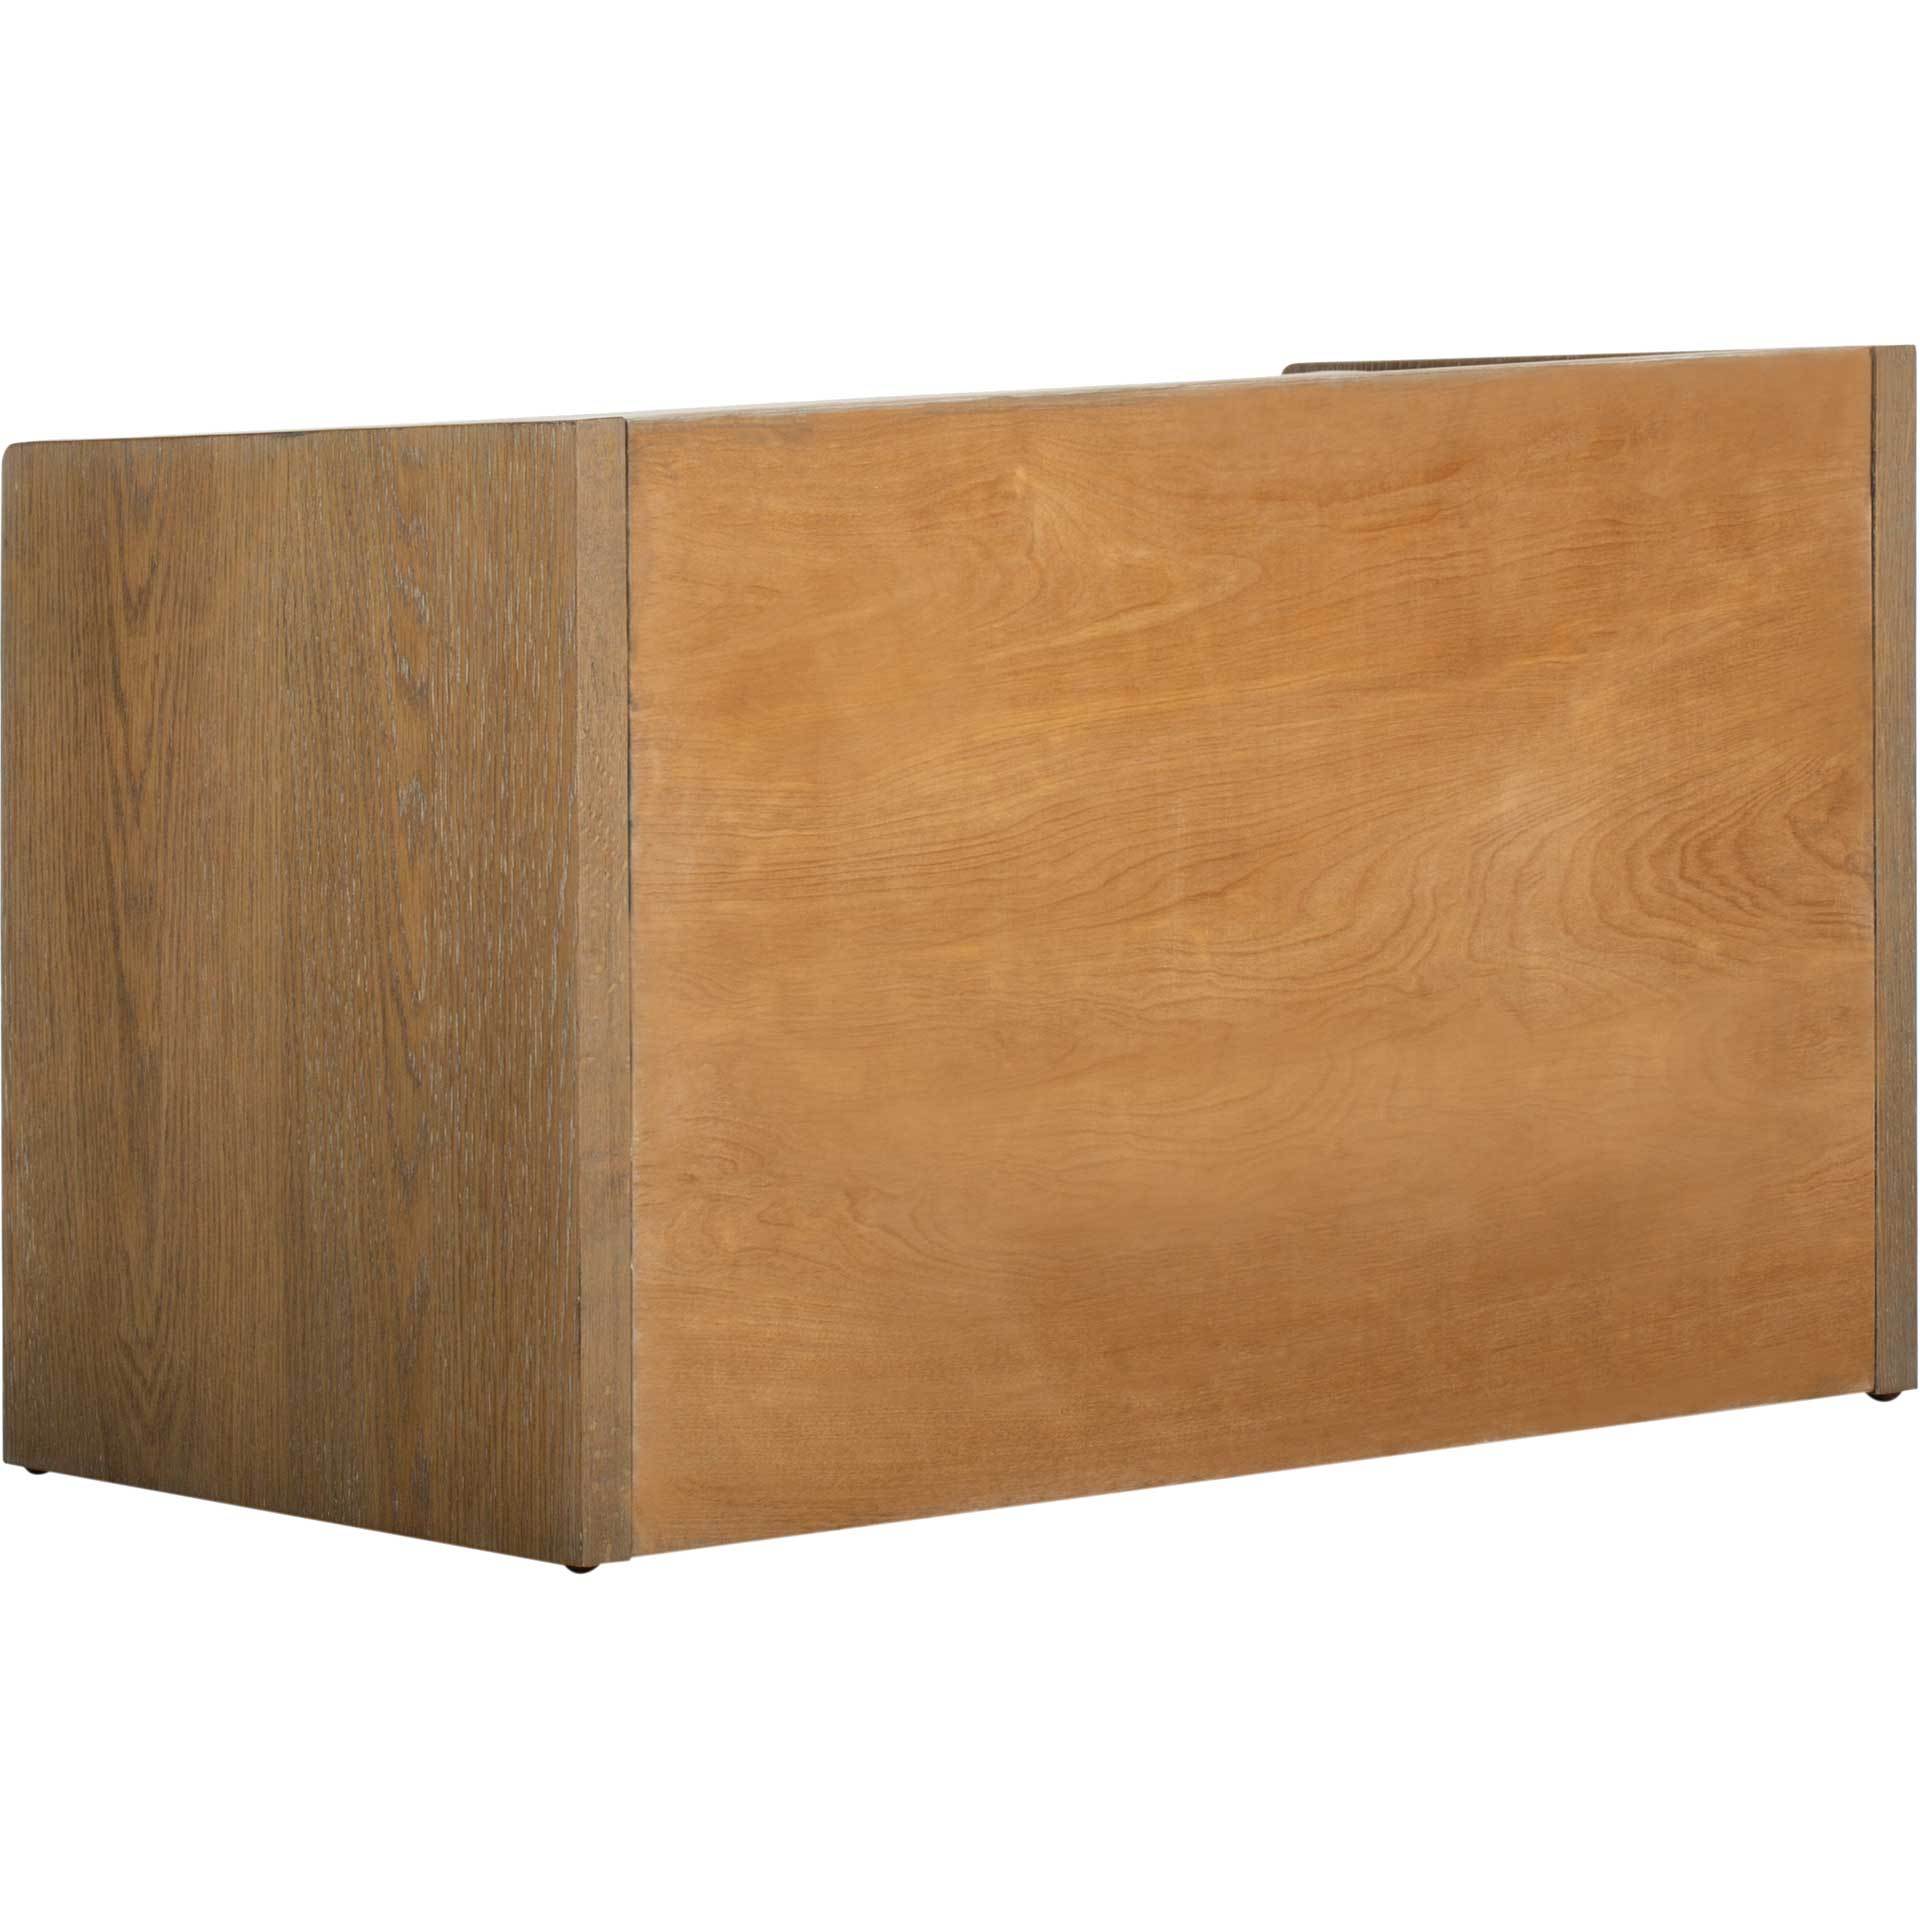 Perla Storage Bench Rustic Oak/Beige